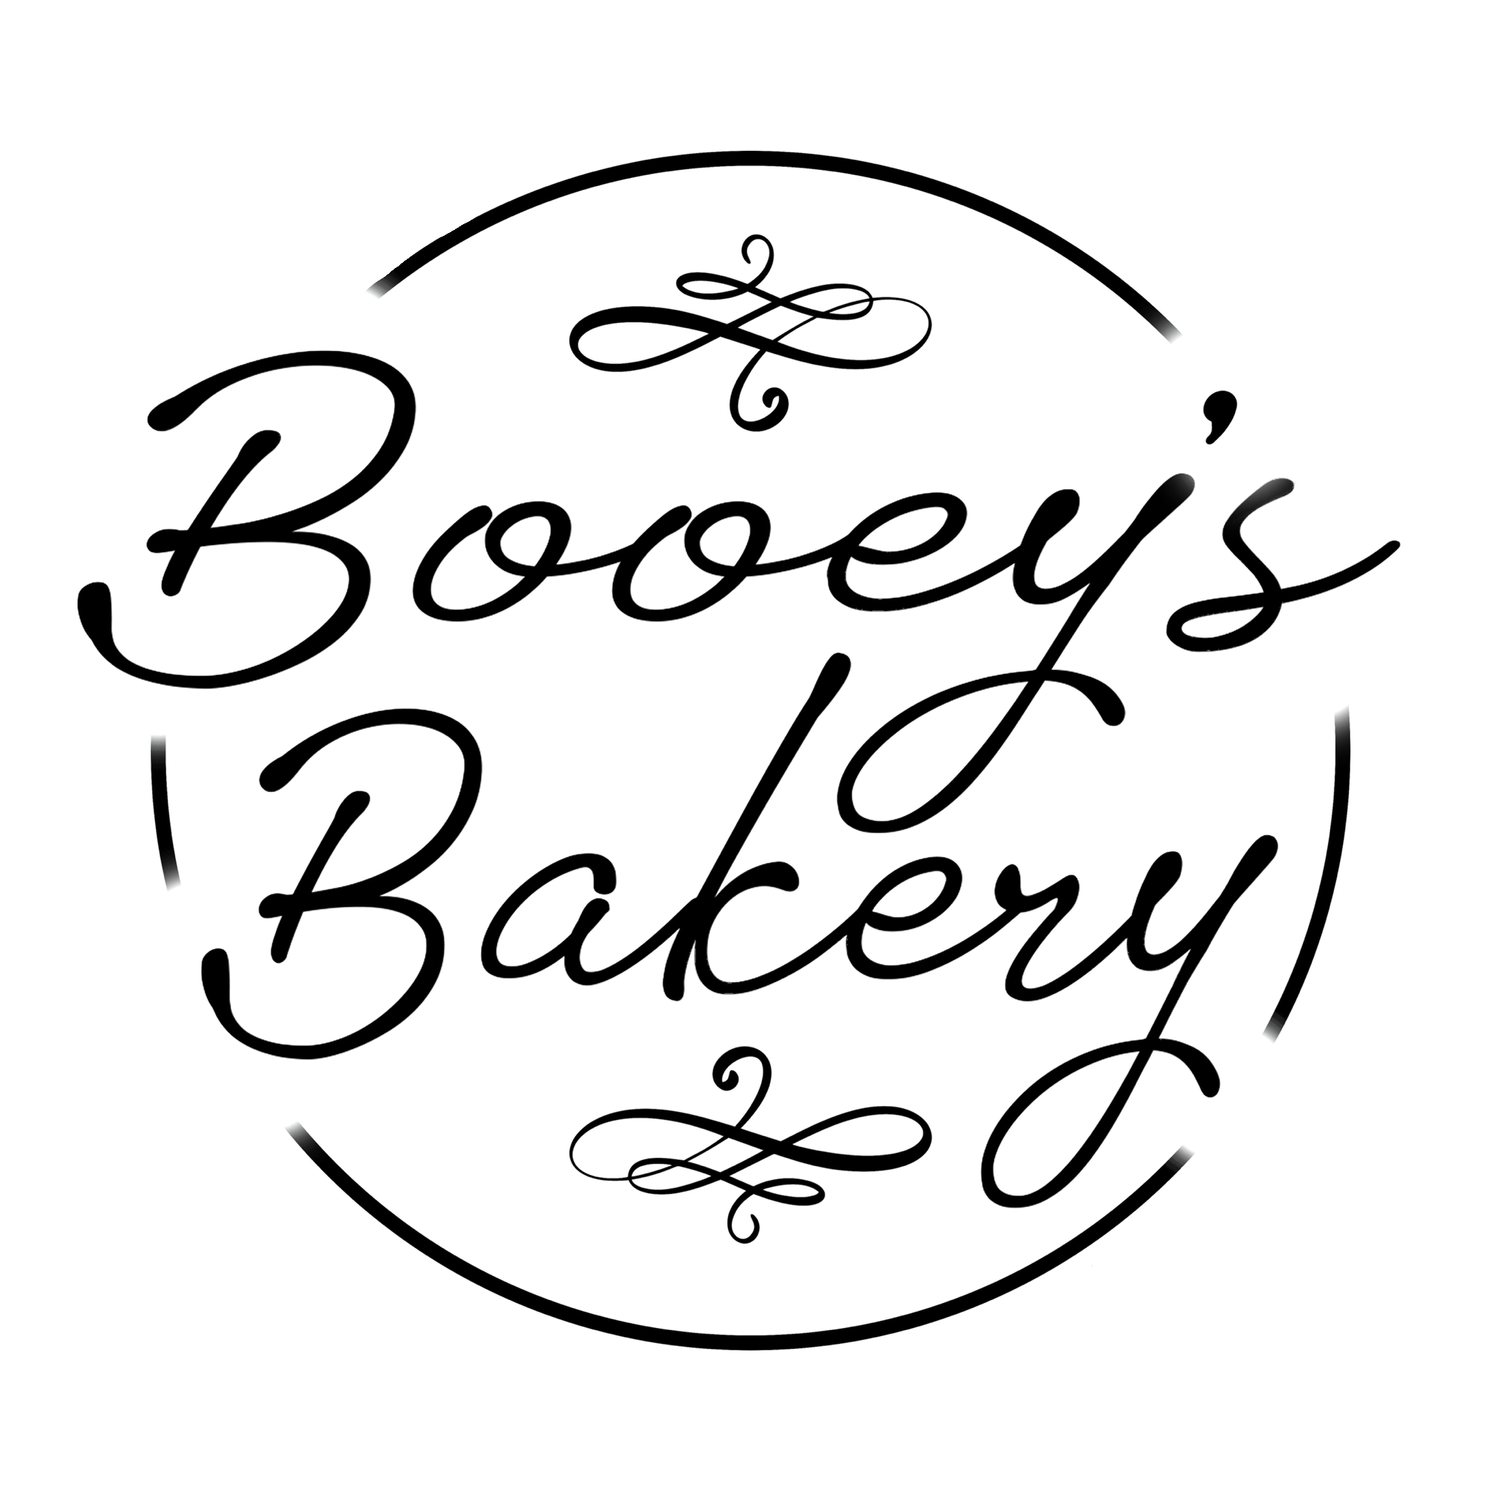 Booey’s Bakery